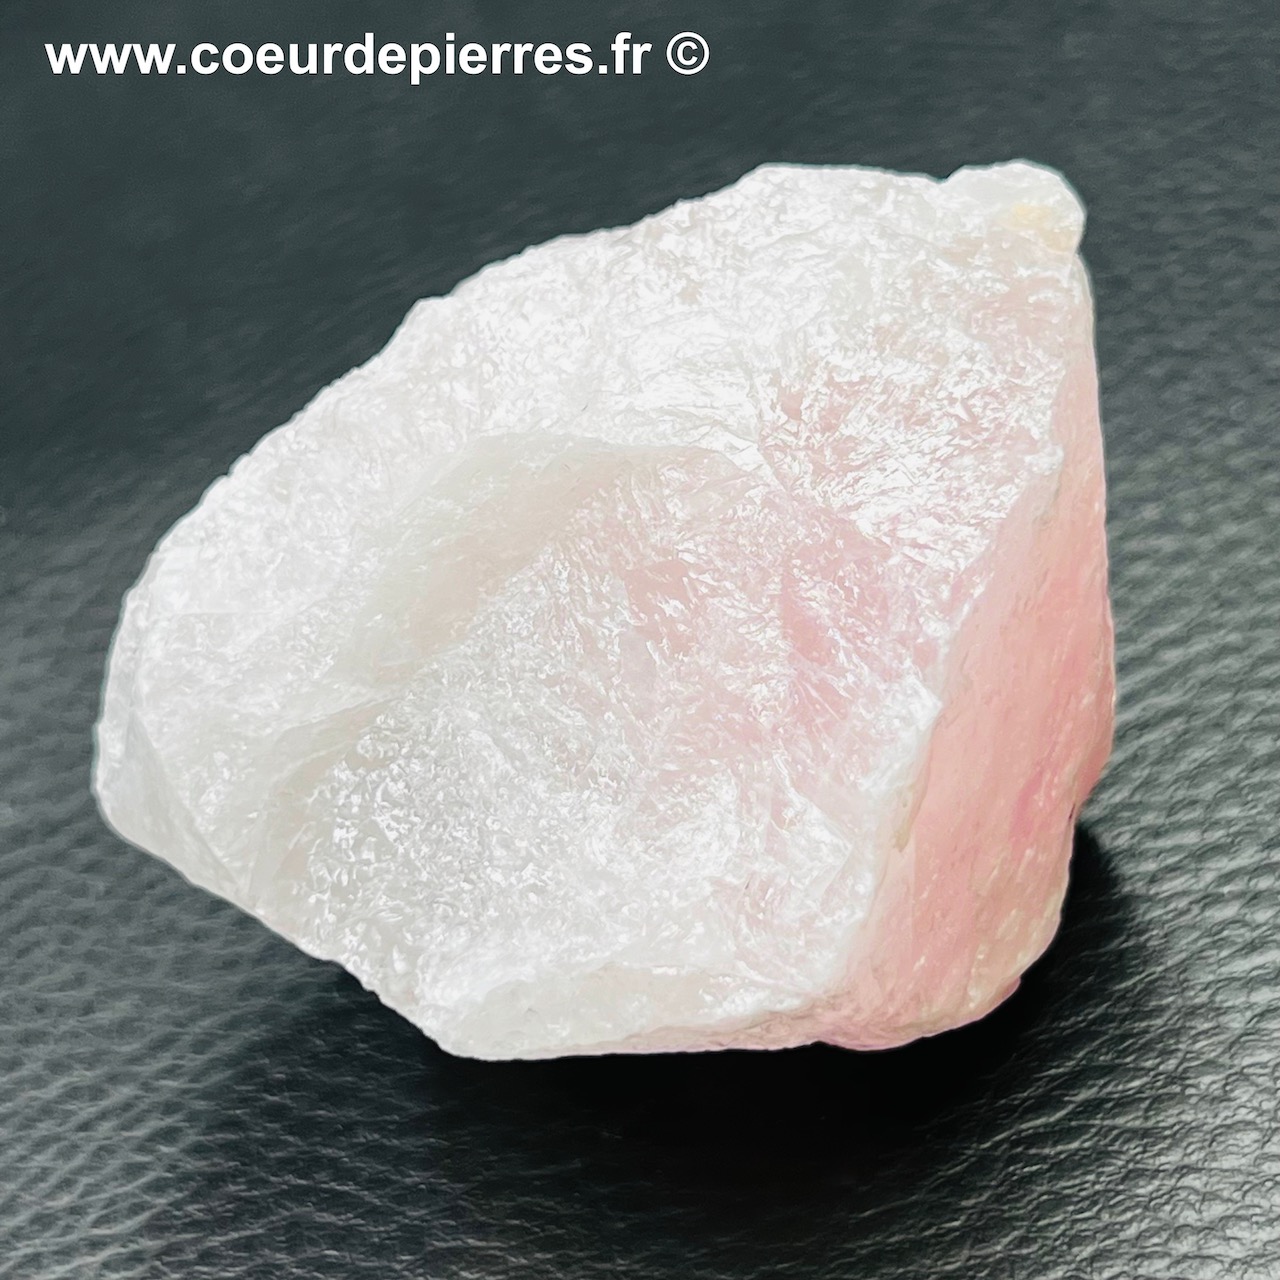 Bloc brut de quartz rose de Madagascar (réf prb1)